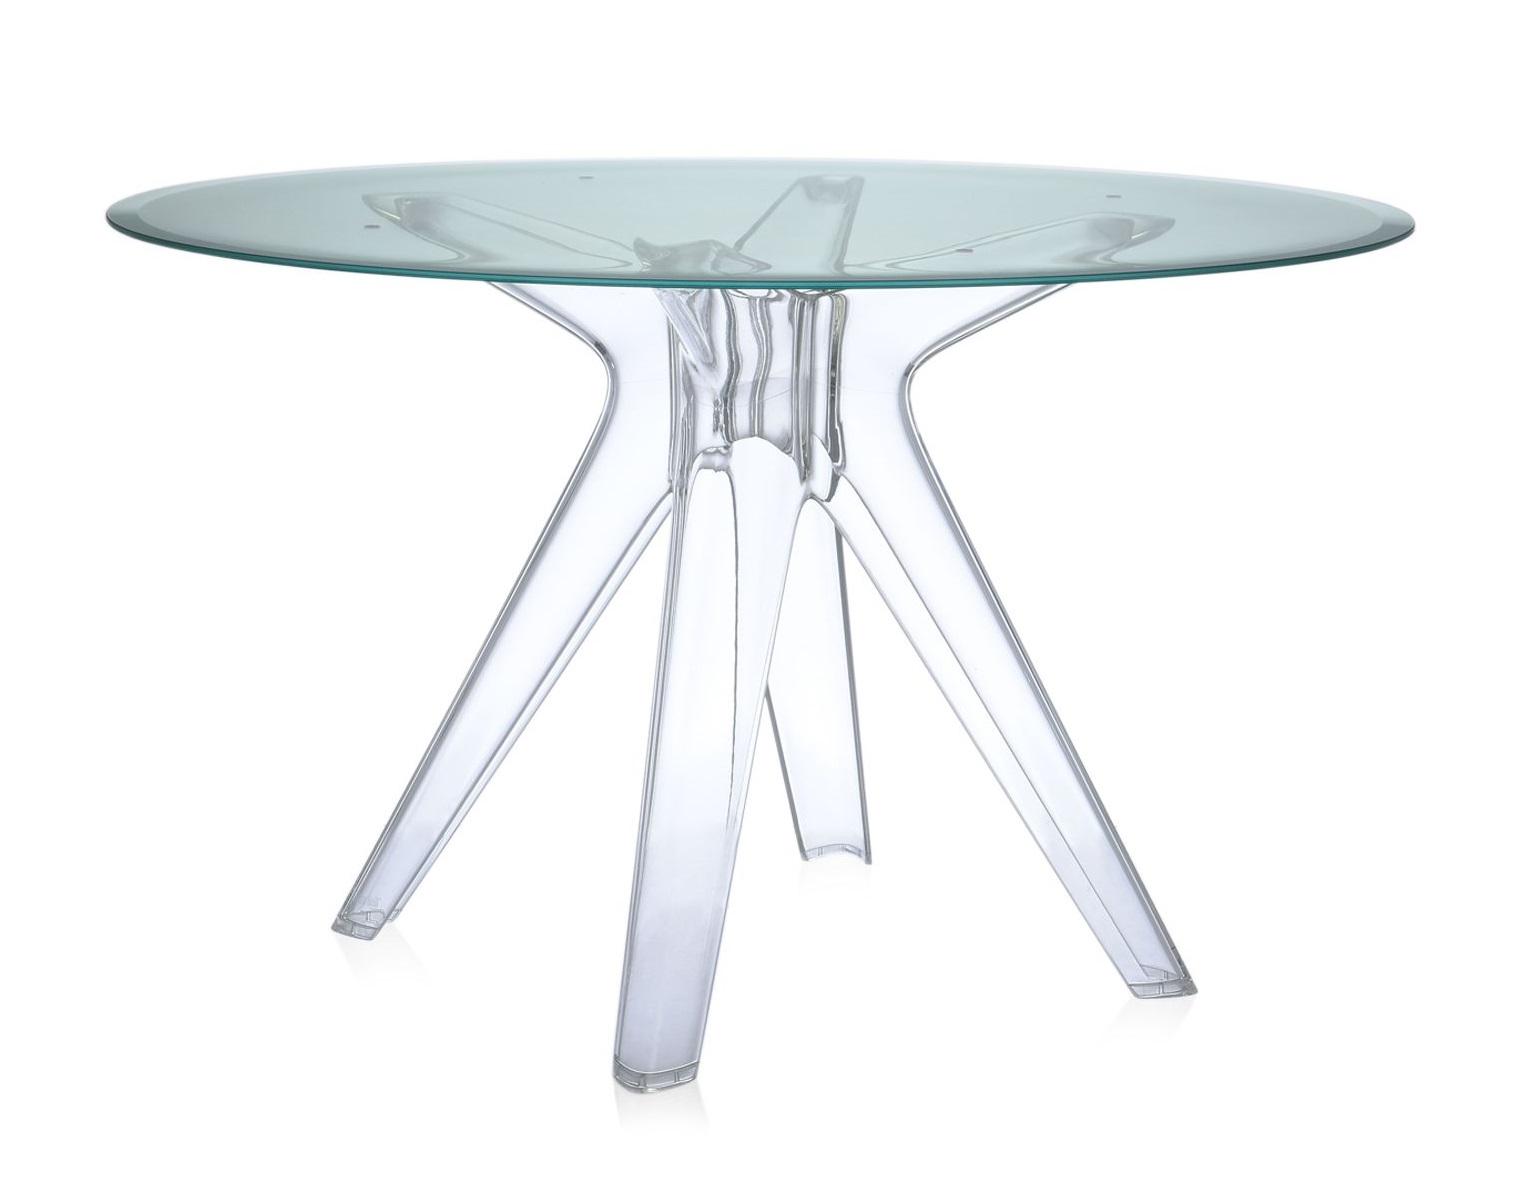 Masa Kartell Sir Gio design Philippe Starck diametru 120cm verde – transparent